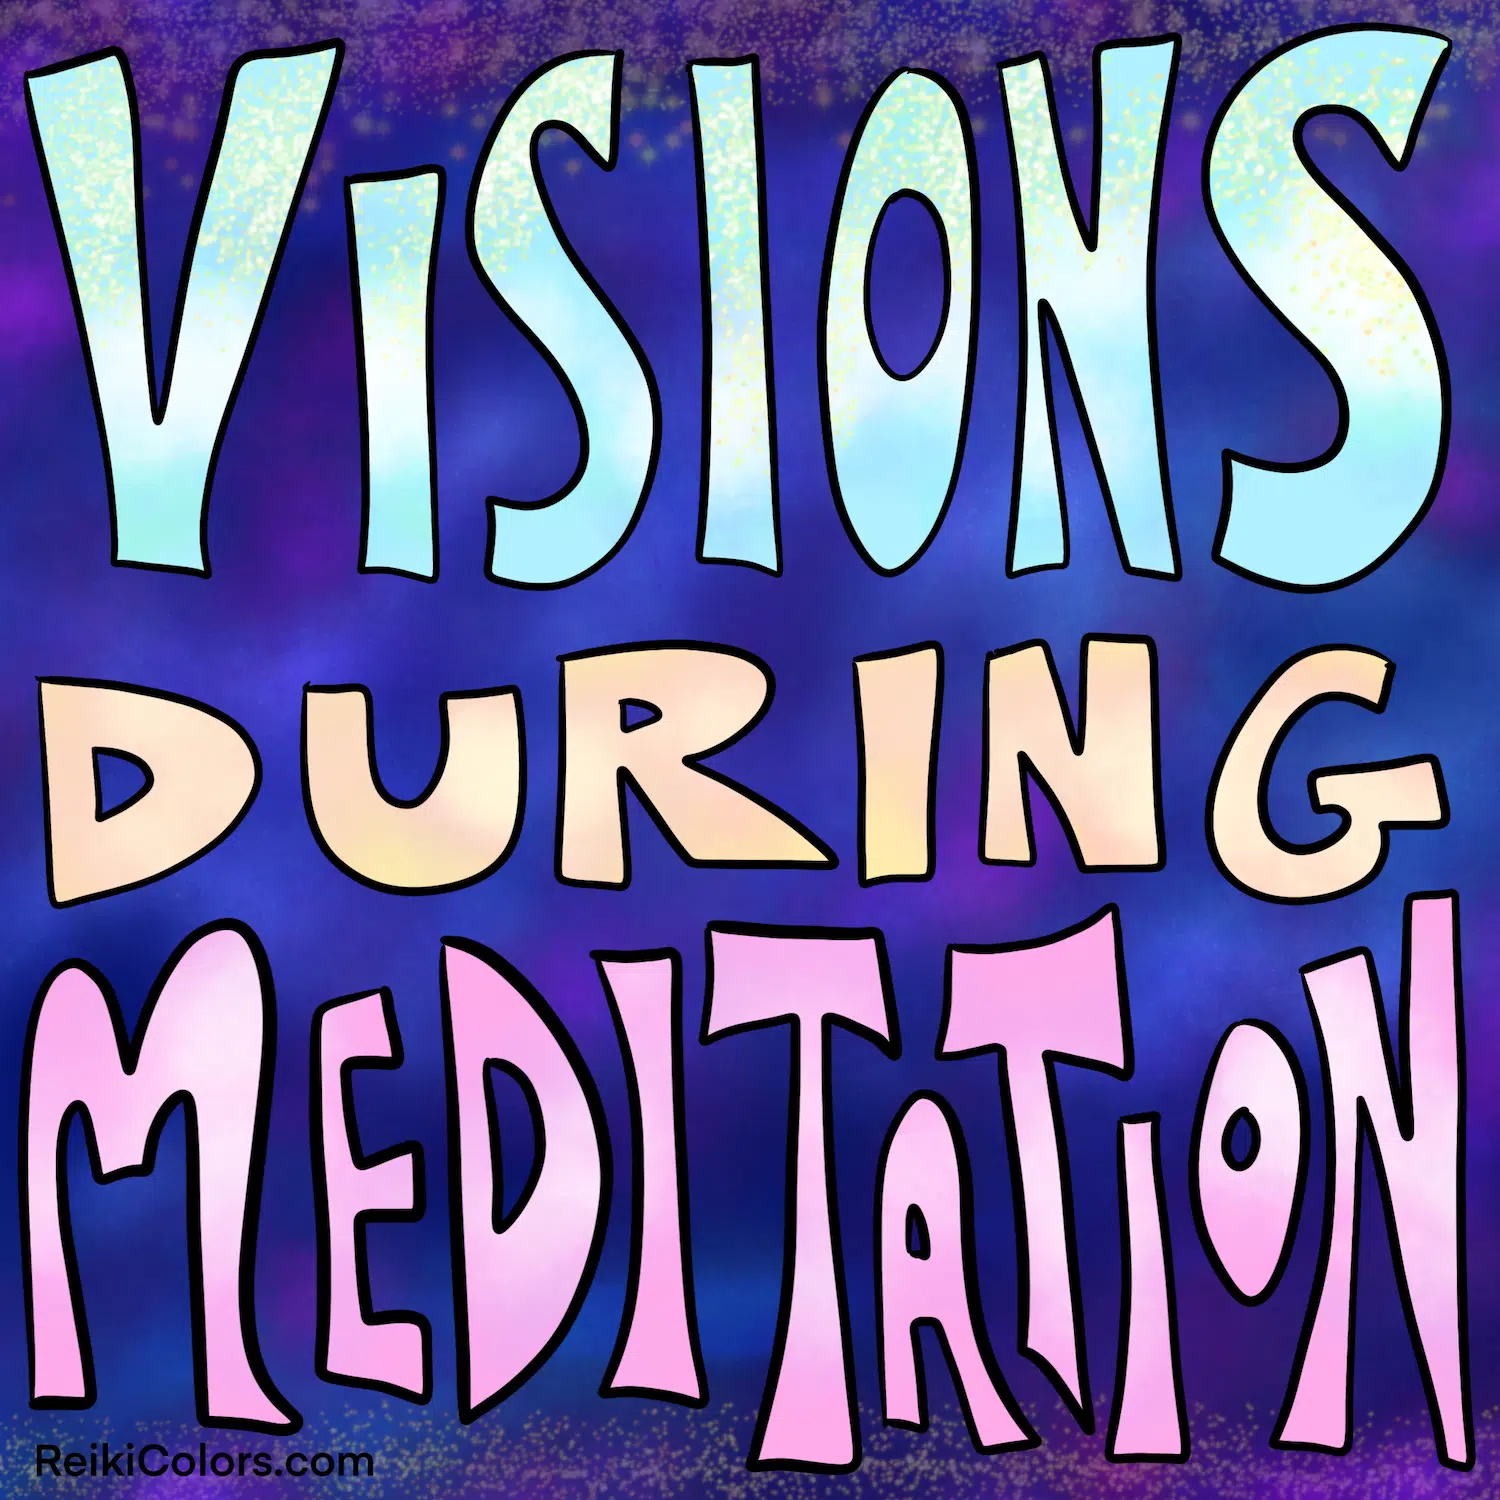 Visions during meditation